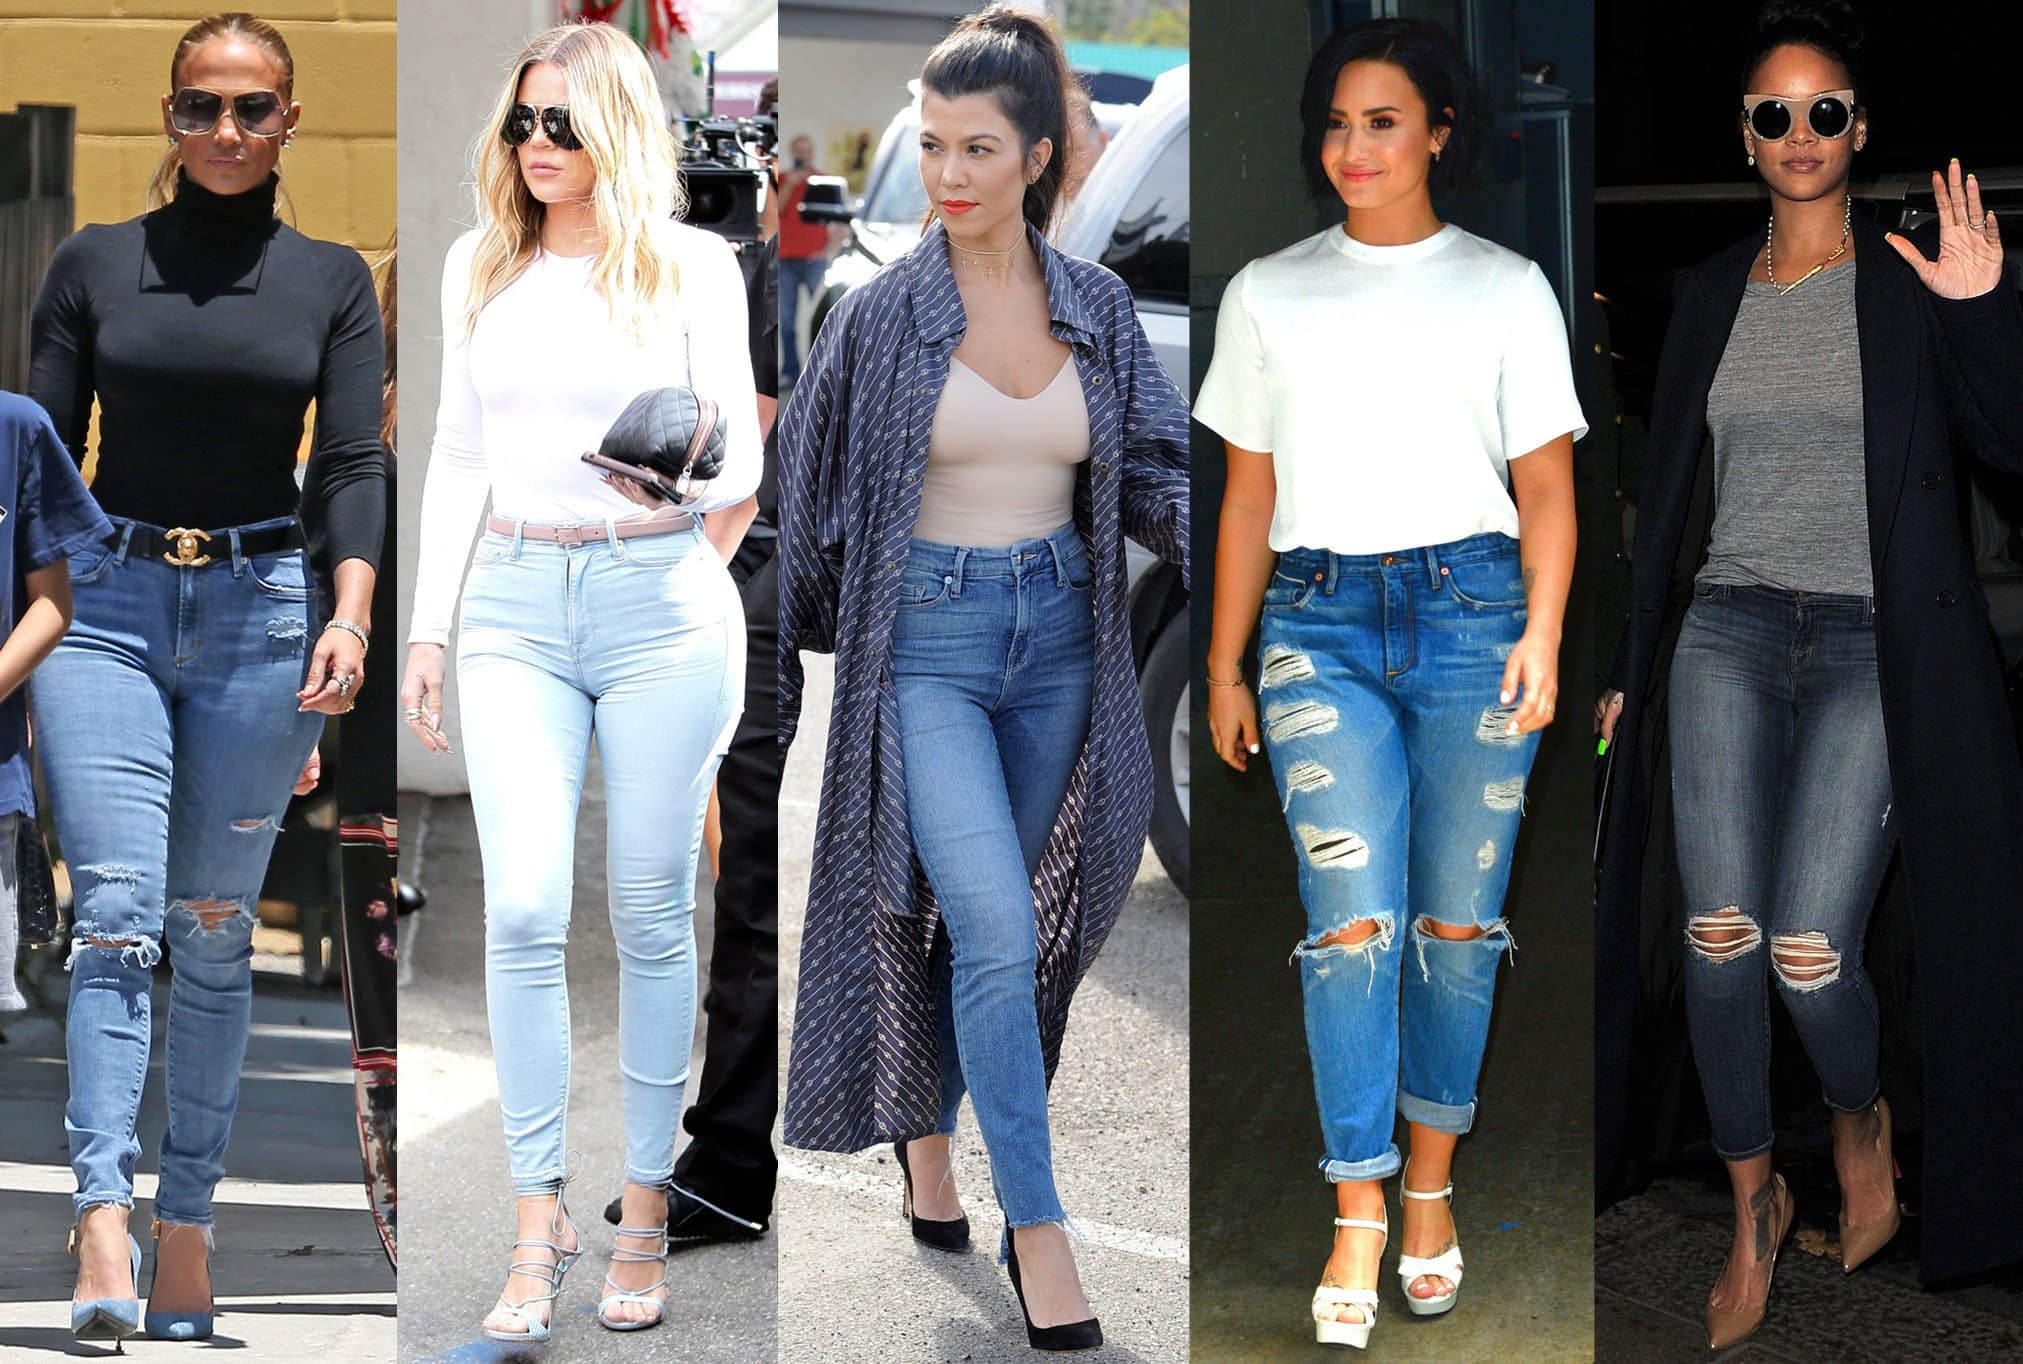 Empowering Style: Jennifer Lopez, Khloe Kardashian, Kourtney Kardashian, Demi Lovato, and Rihanna demonstrate how jeans can enhance and celebrate curvy figures